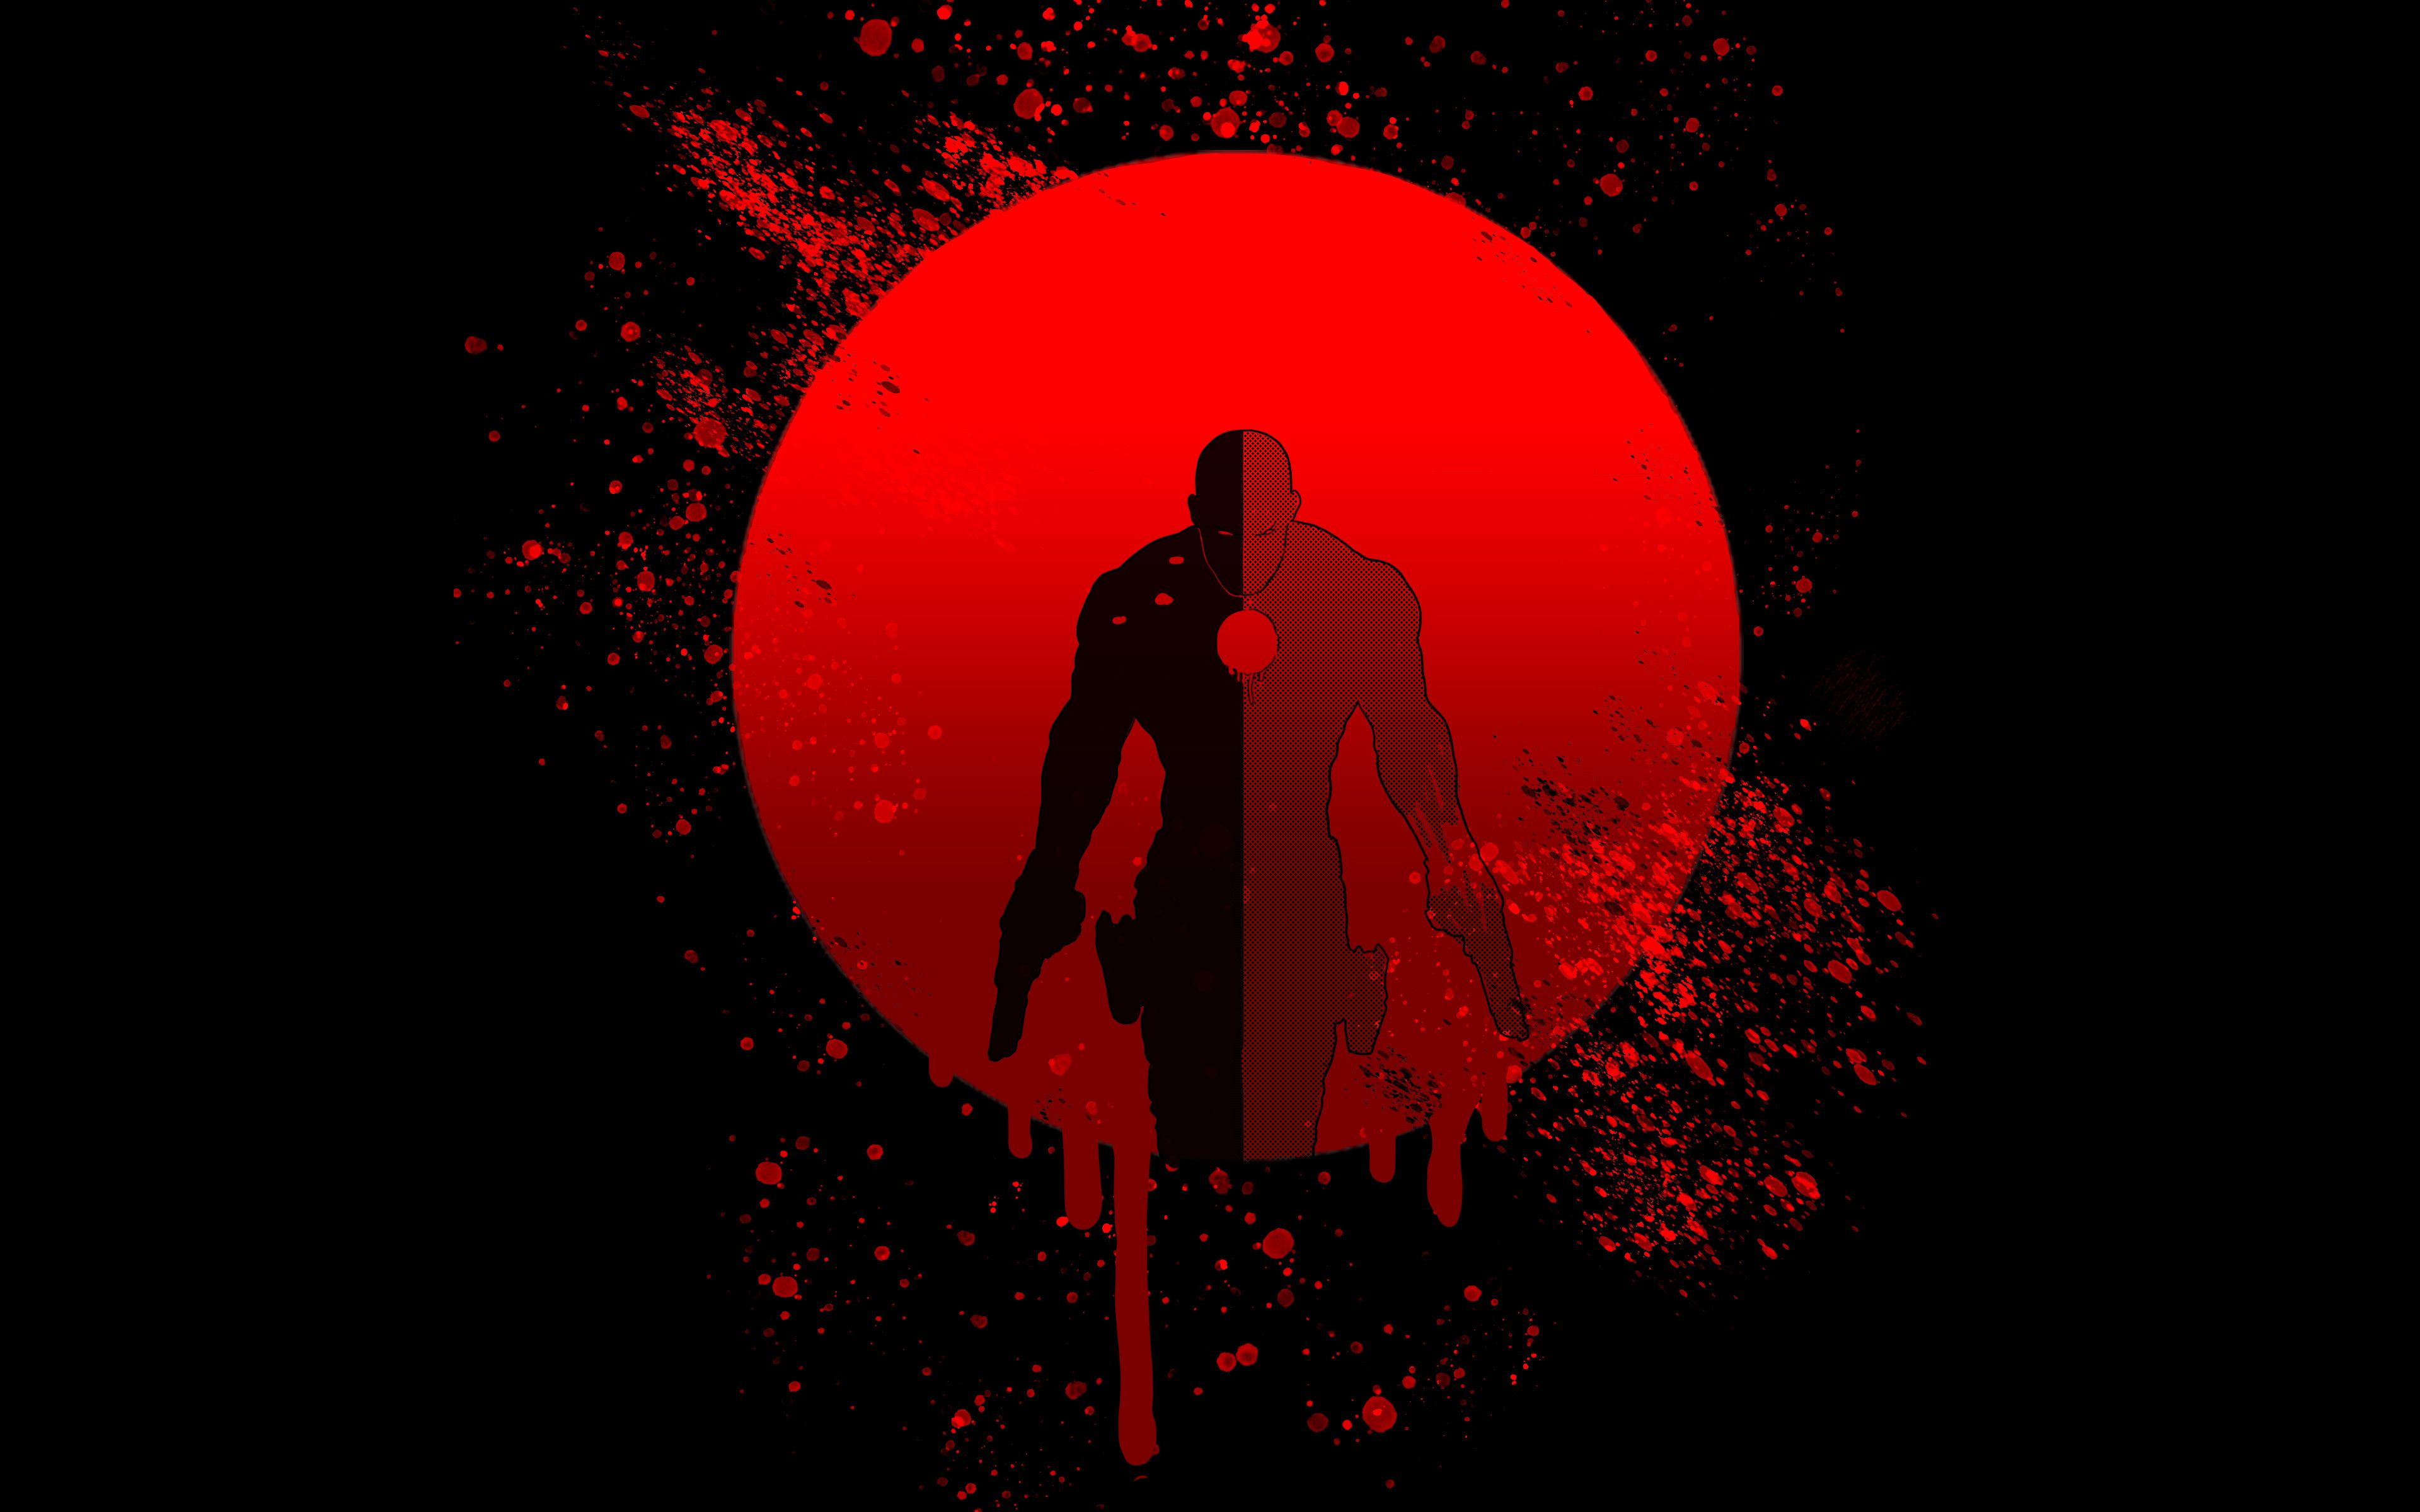 Bloodshot Movie 4K Poster Wallpapers